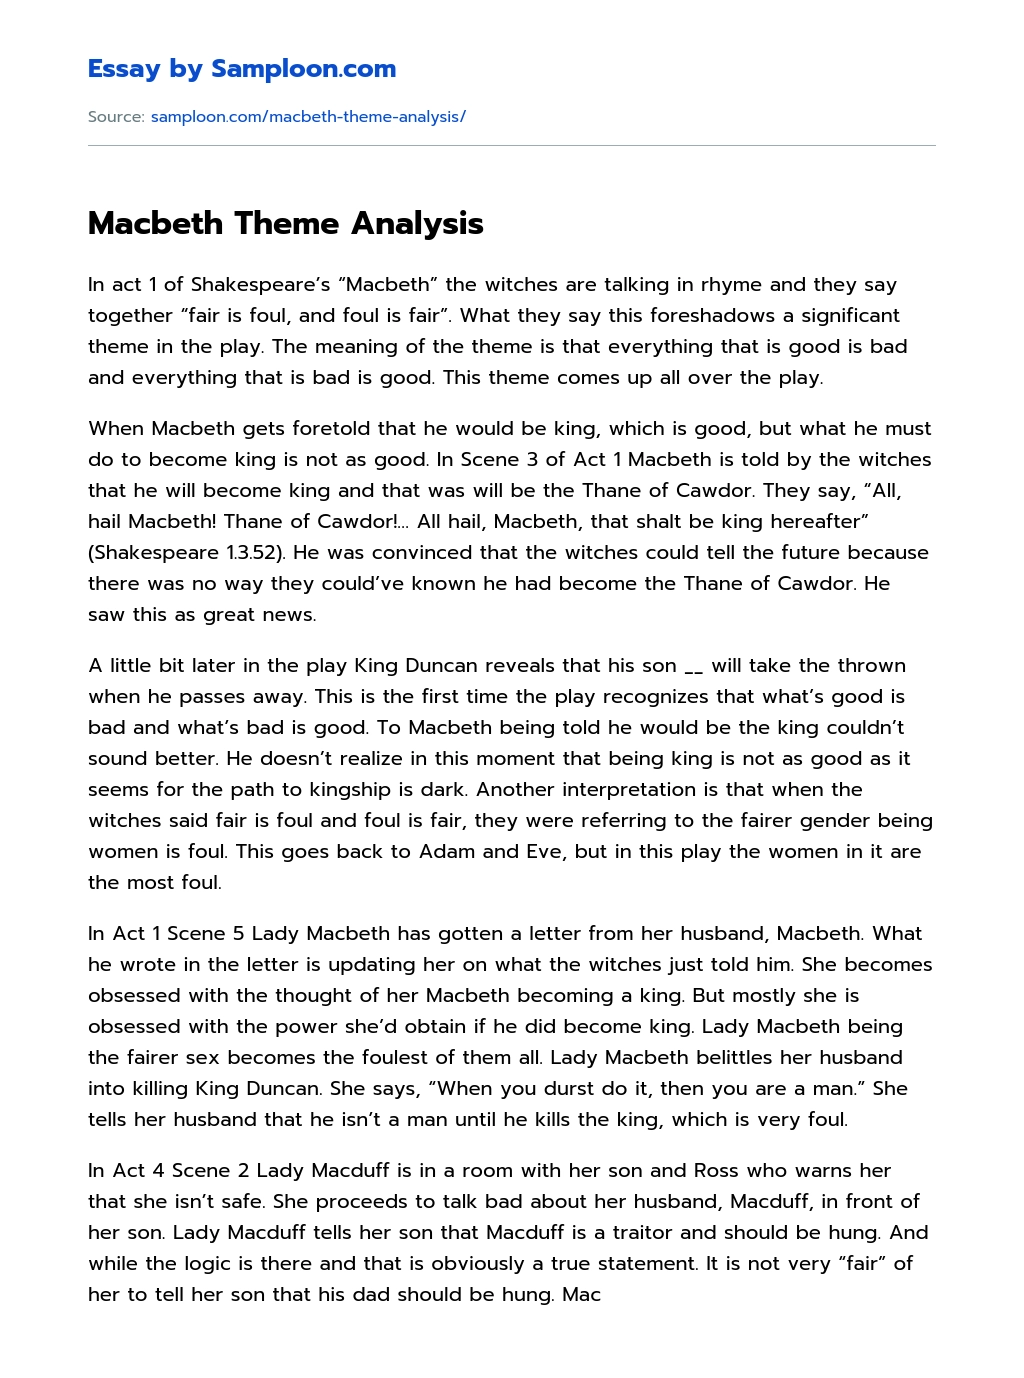 Macbeth Theme Analysis essay